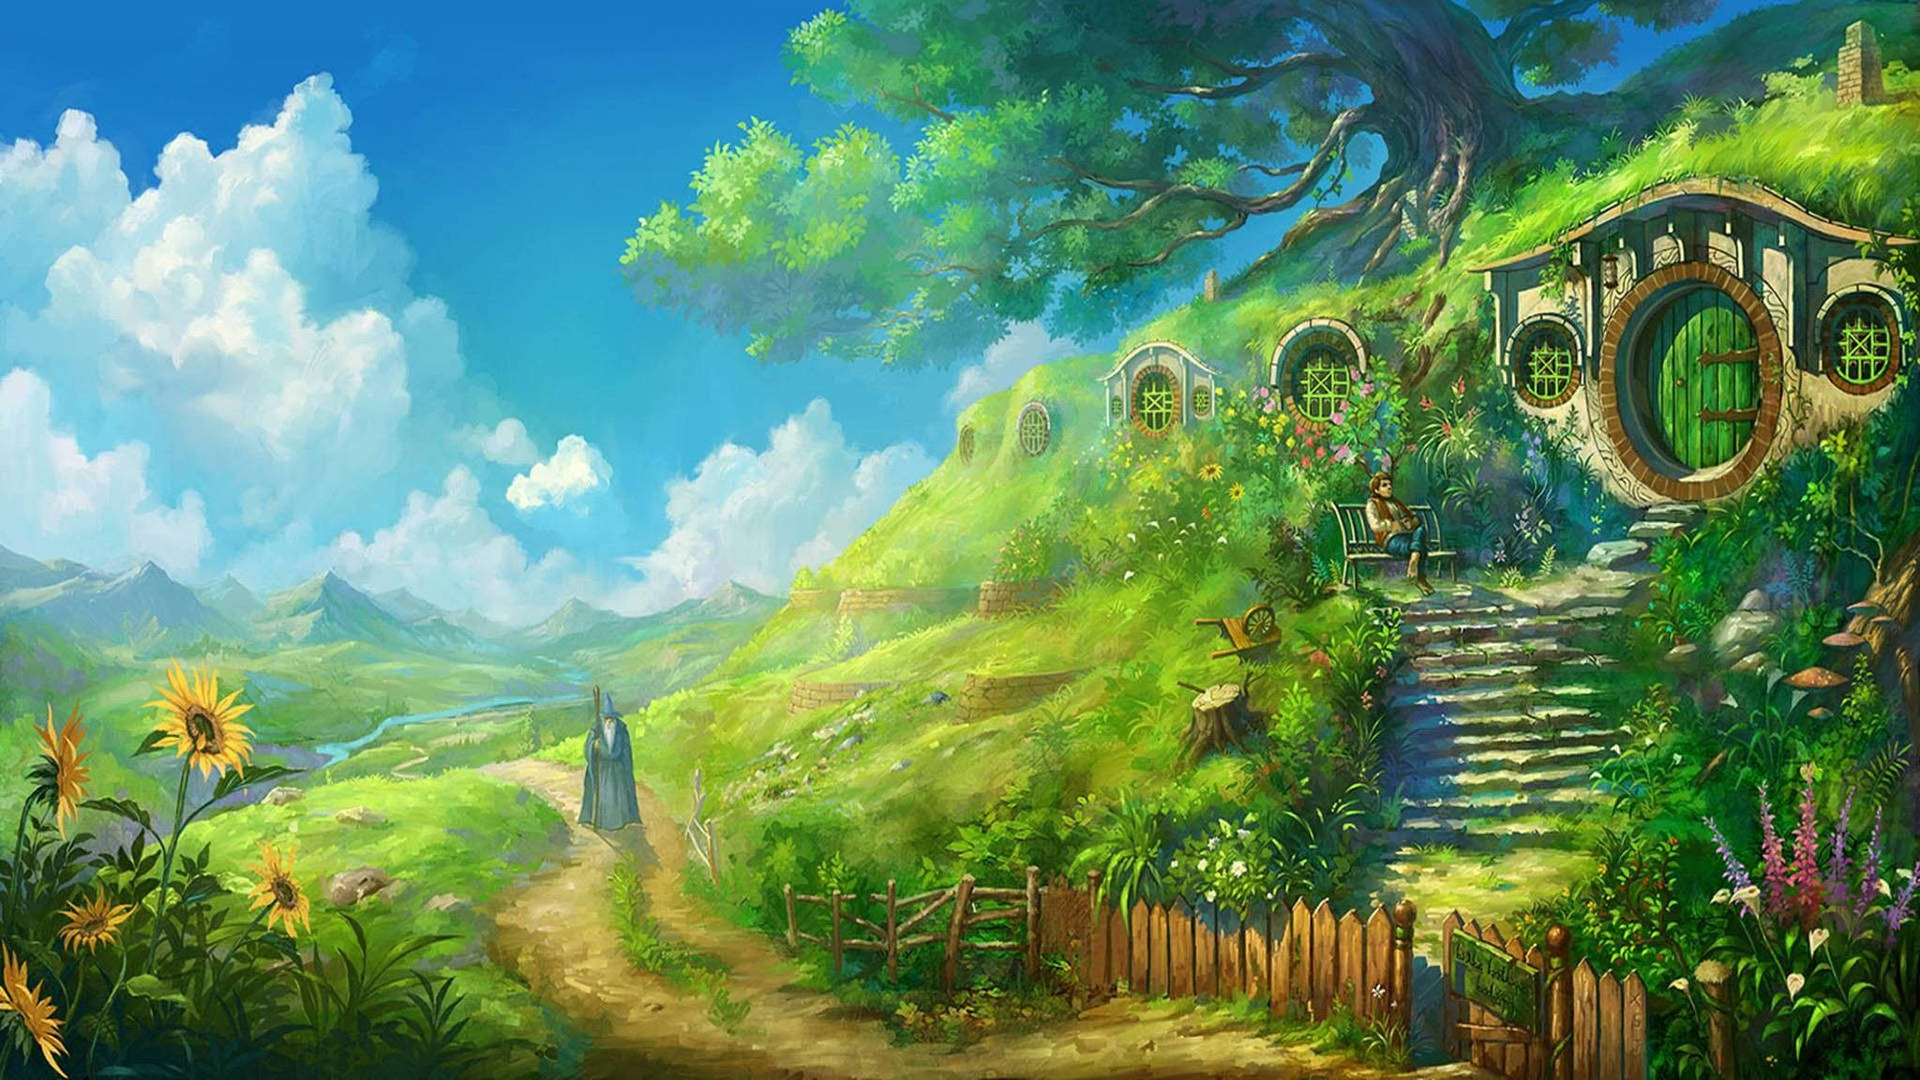 Studio Ghibli 2048X1152 Wallpaper and Background Image